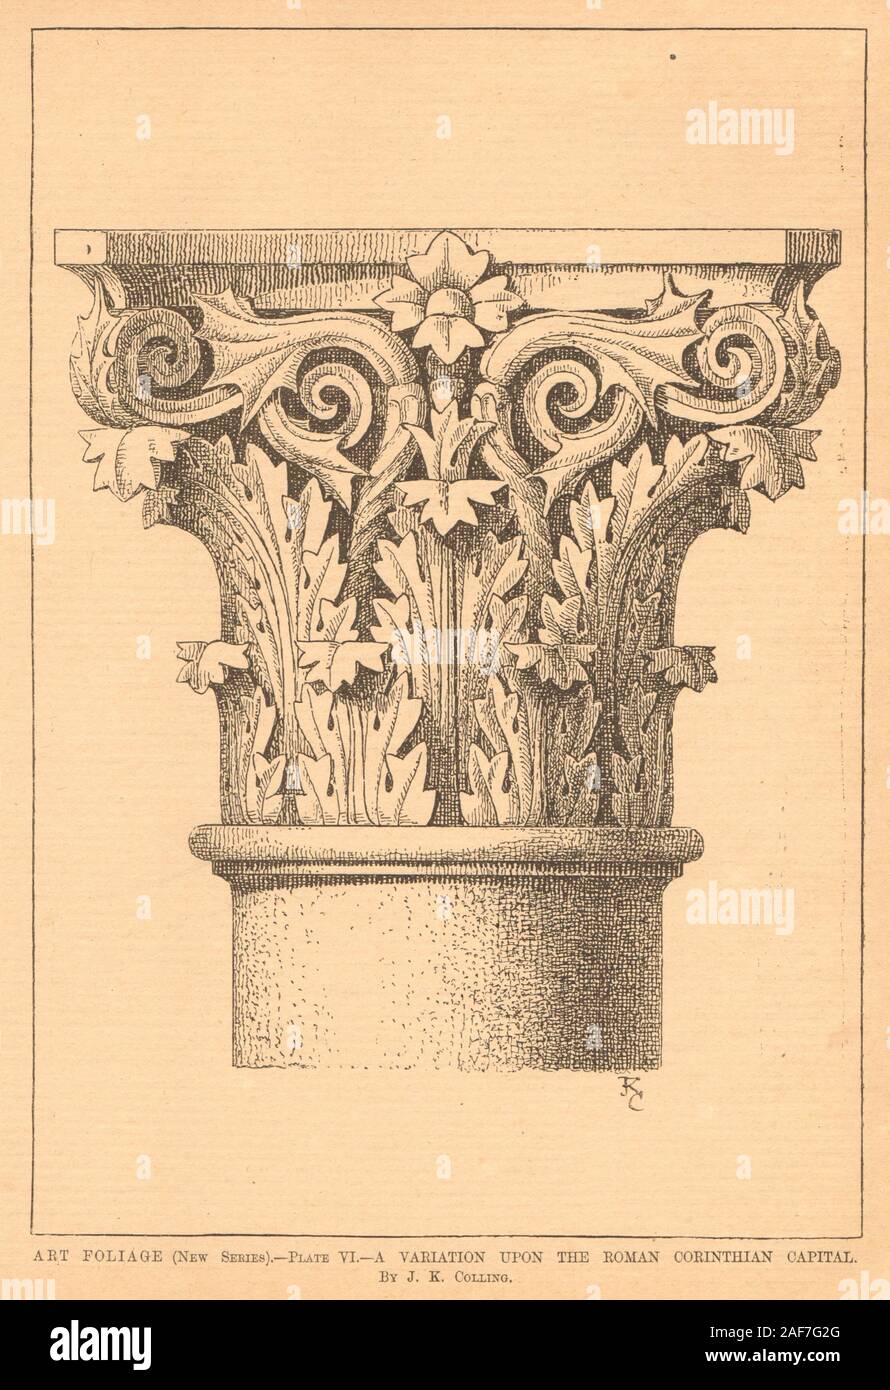 Art Foliage Plate 6. Roman Corinthian capital variation by JK Colling 1901 Stock Photo